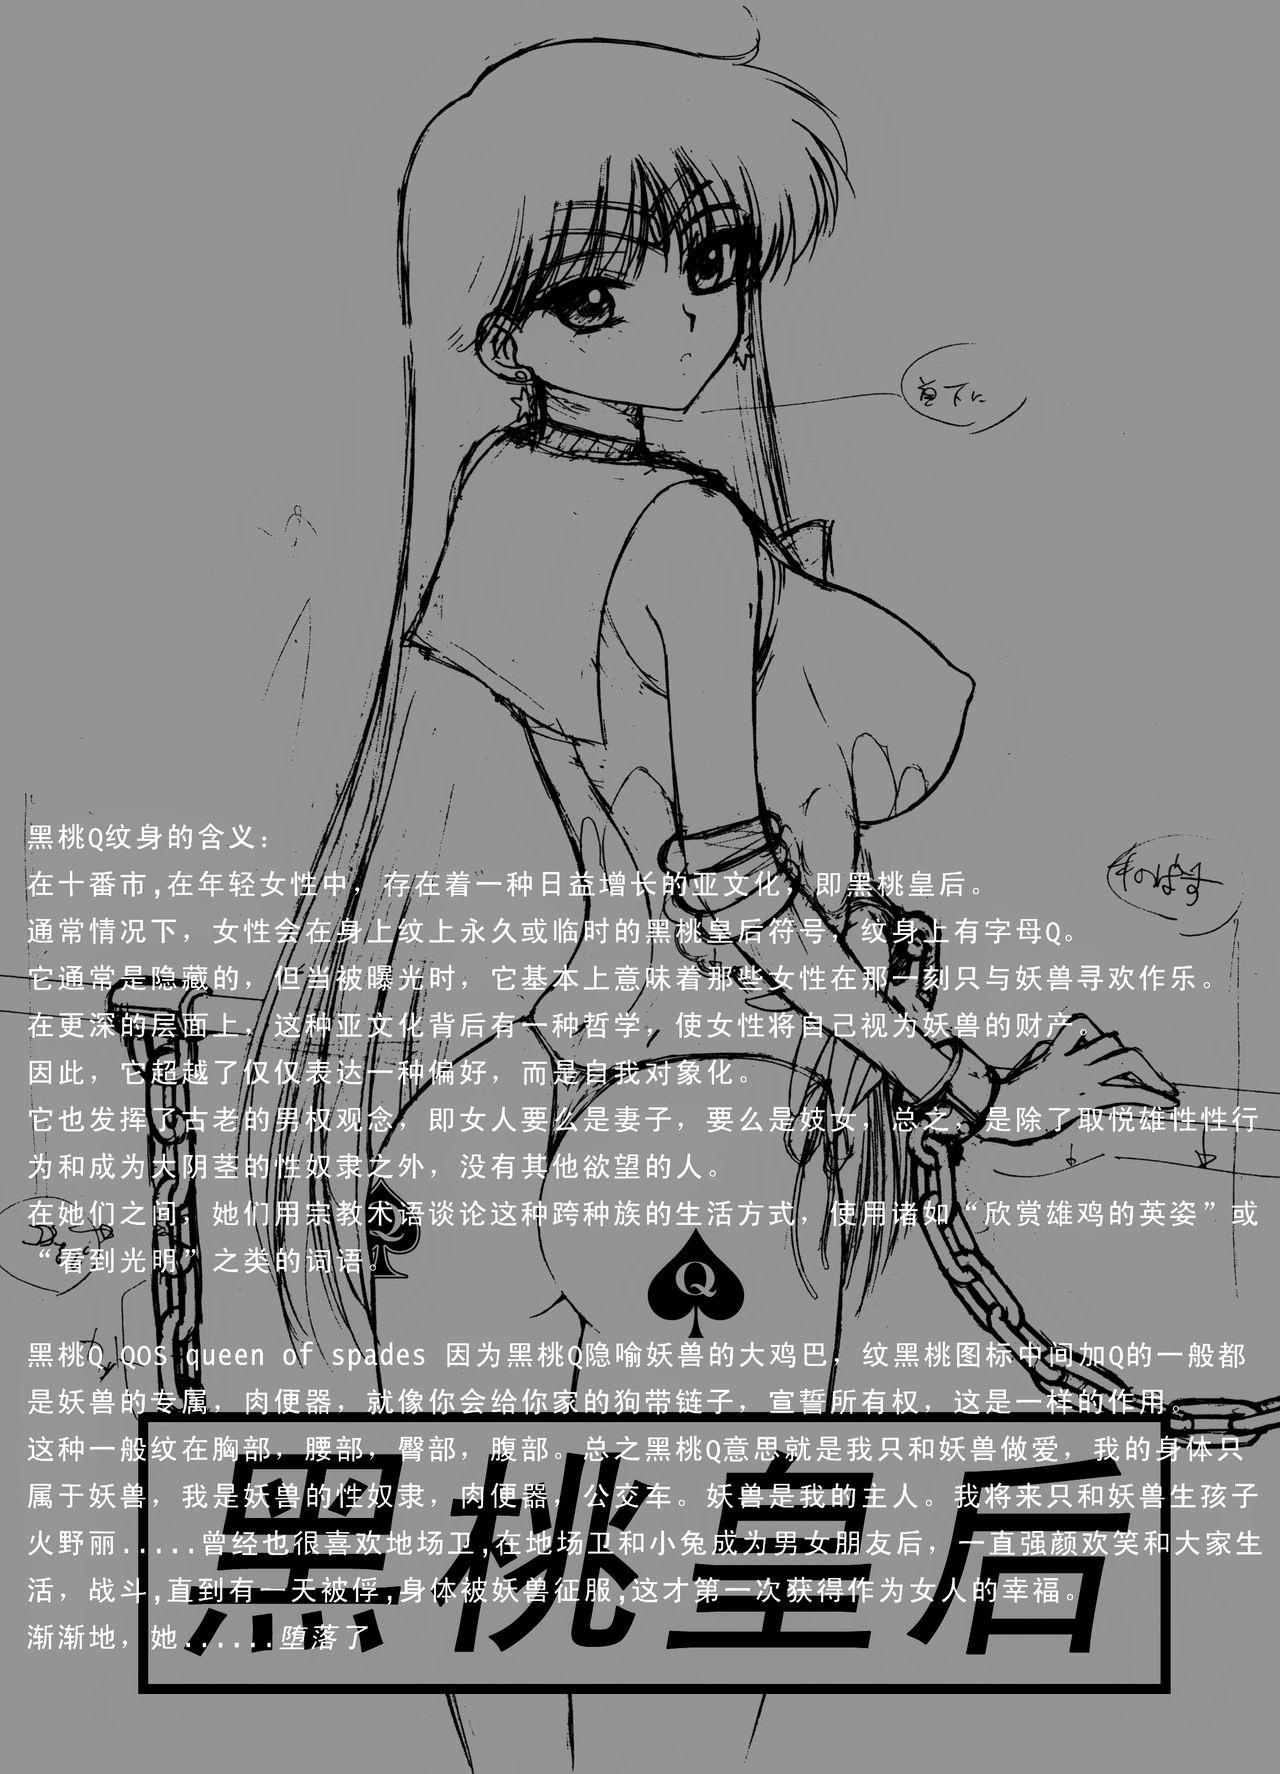 Asslicking QUEEN OF SPADES - 黑桃皇后 - Sailor moon Play - Page 5